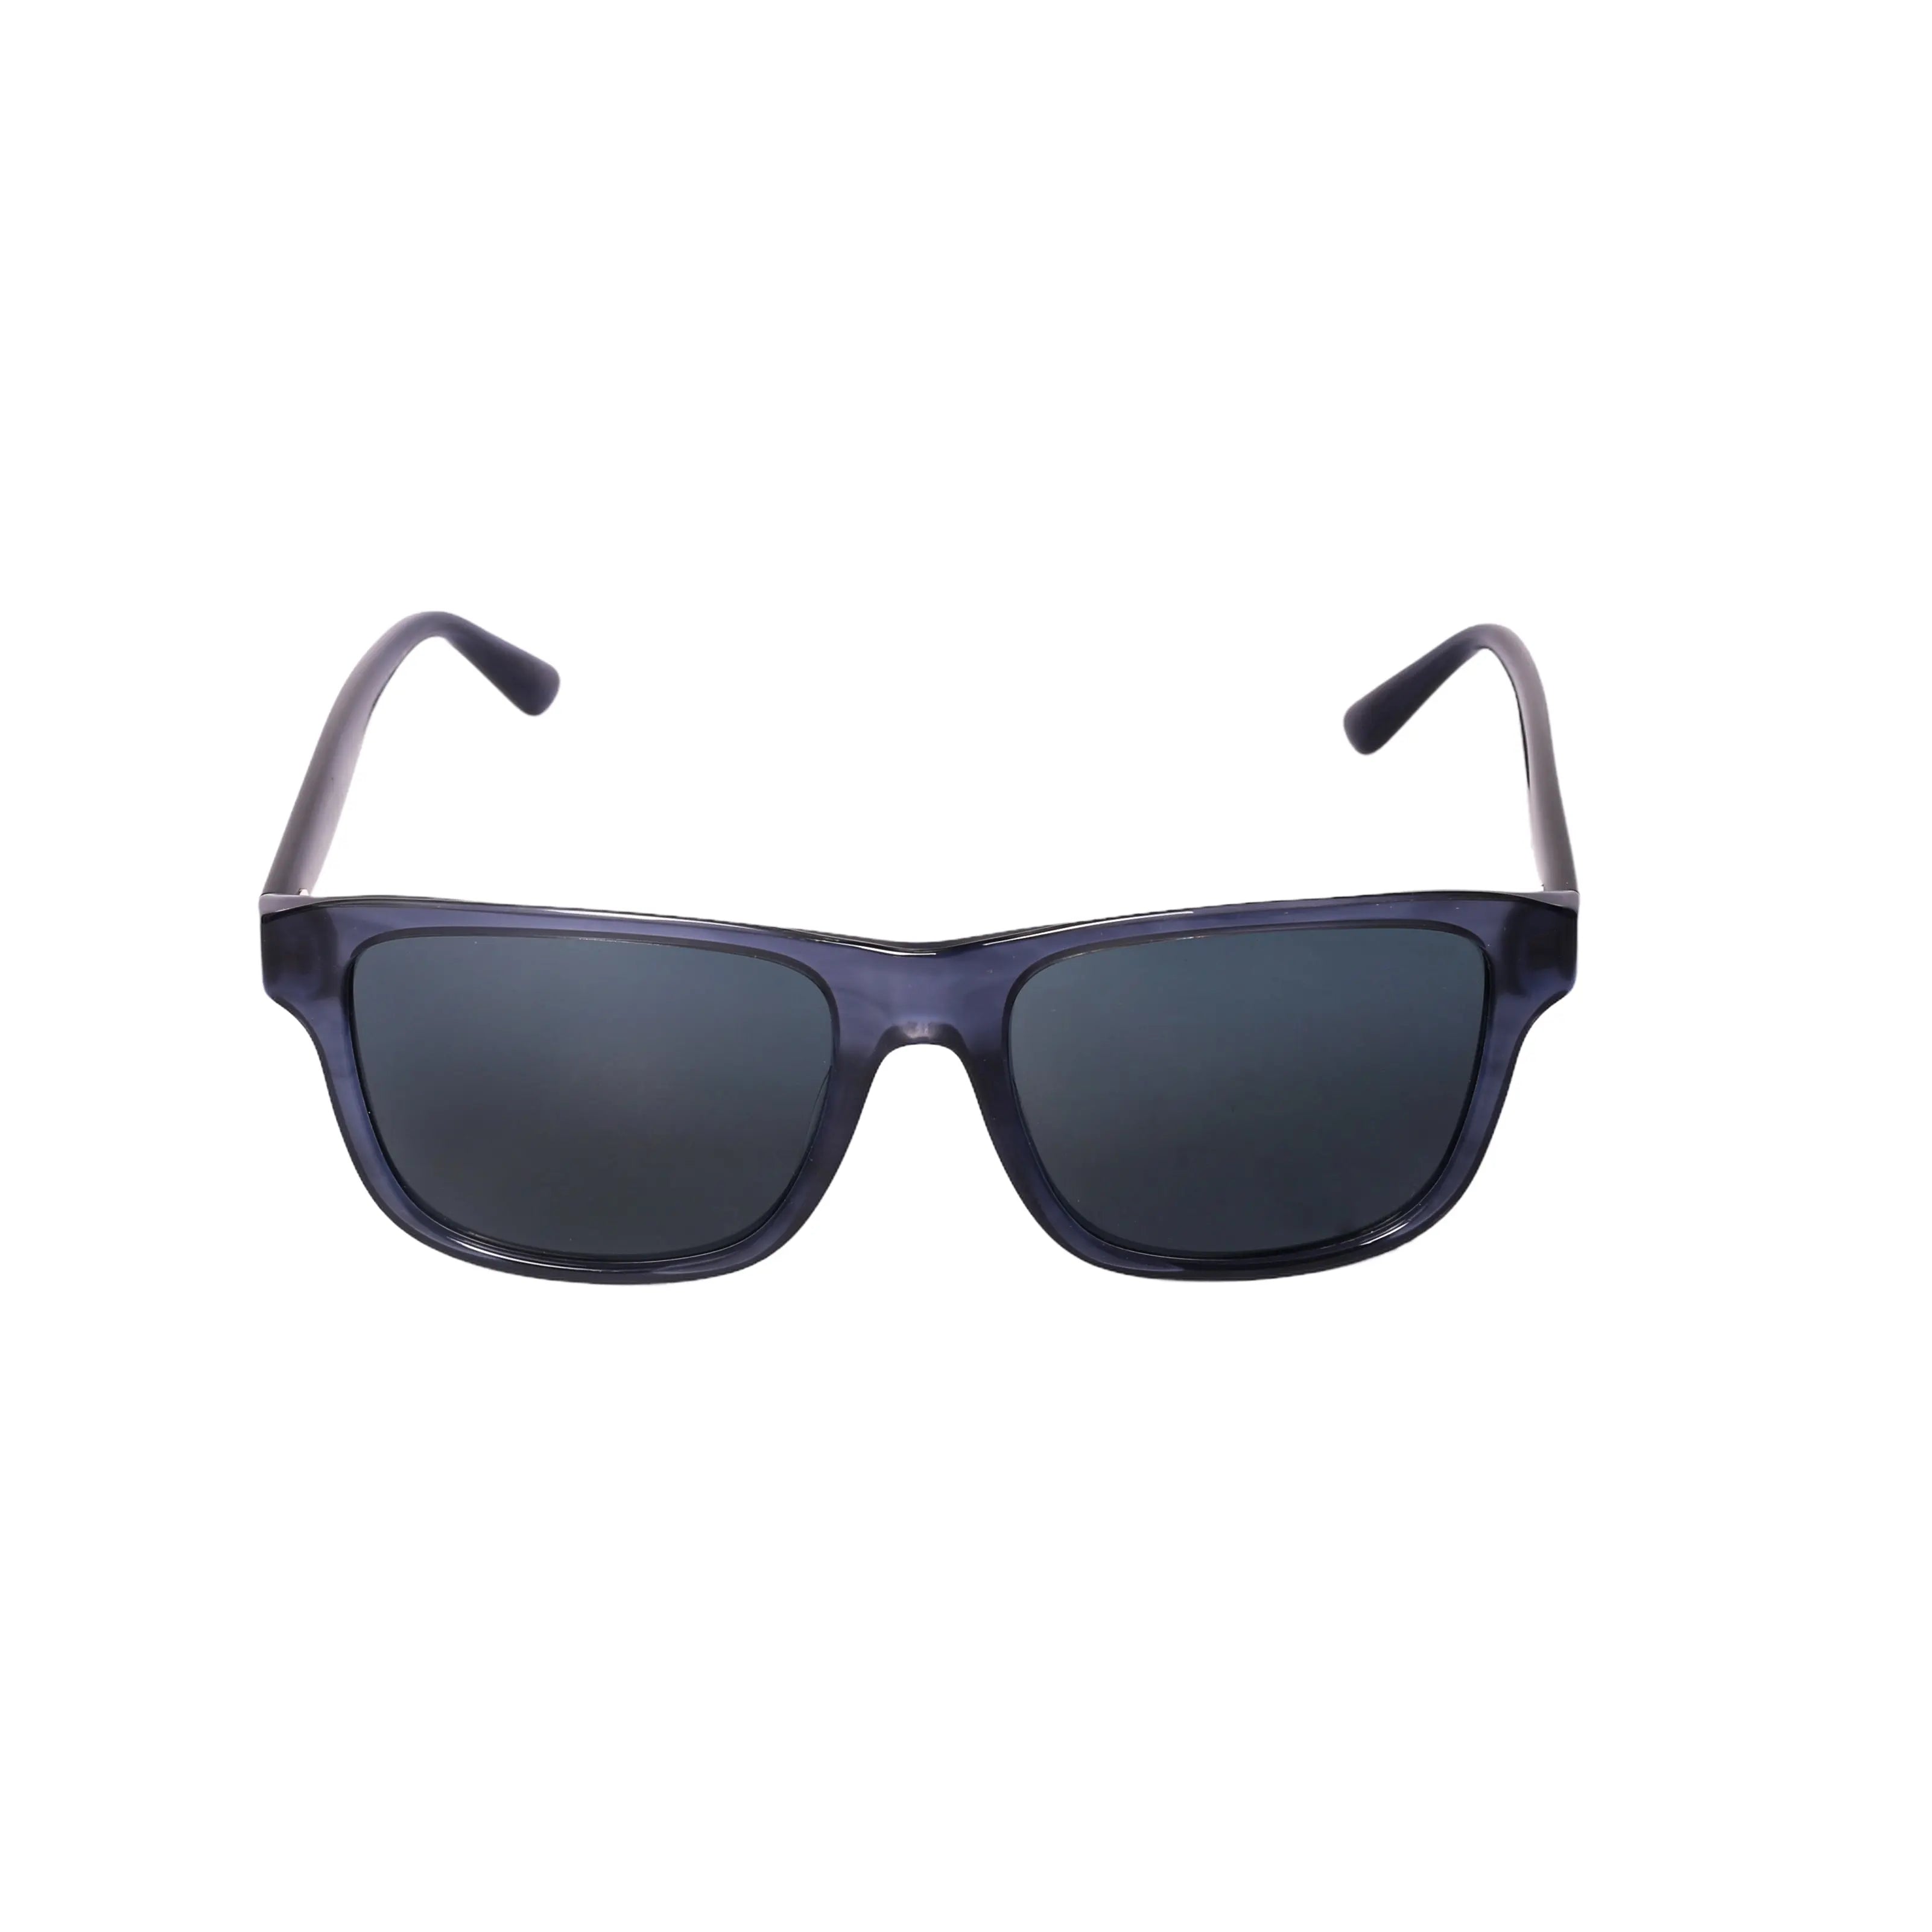 Emporio Armani-EA 4208-56-6054 Sunglasses - Premium Sunglasses from Emporio Armani - Just Rs. 15290! Shop now at Laxmi Opticians